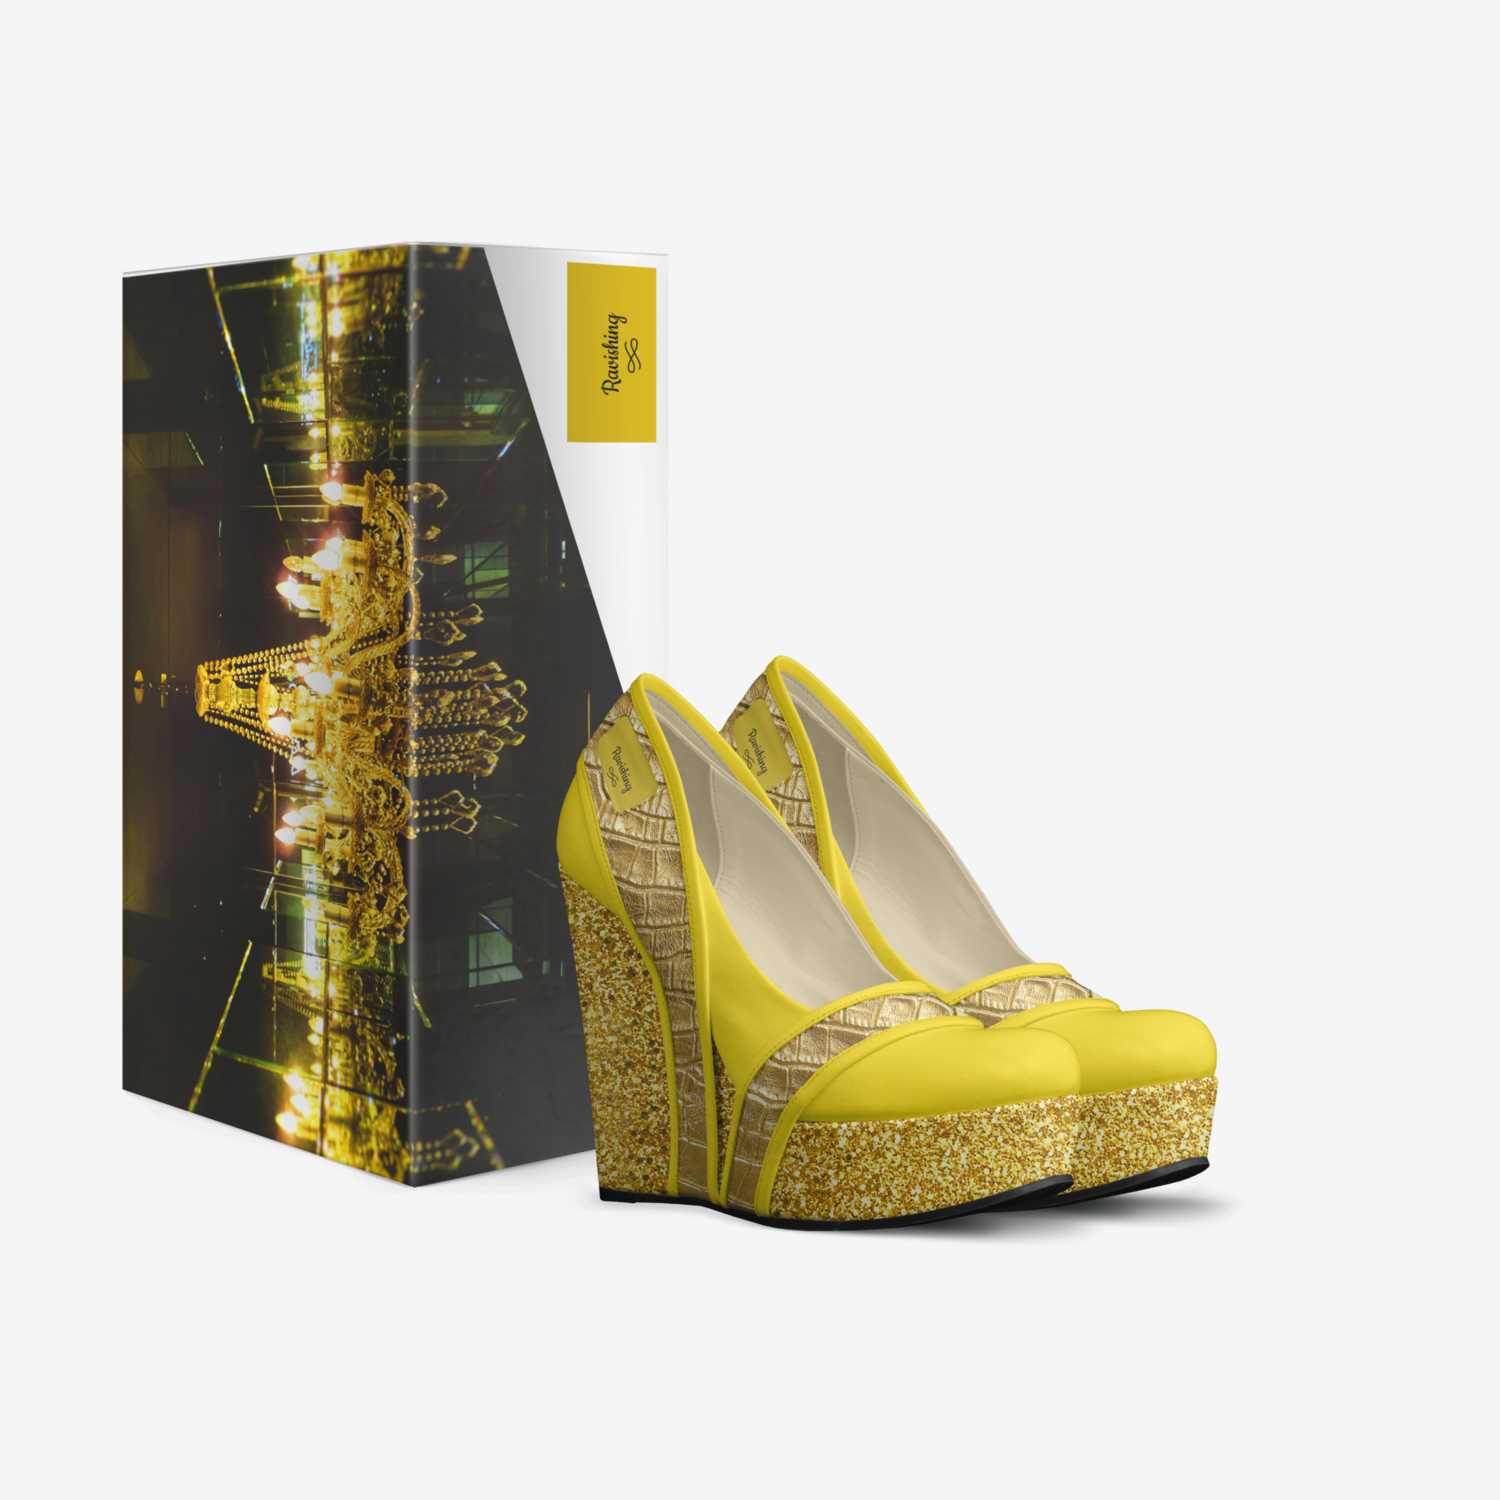 Ravishing custom made in Italy shoes by Robyn Cruz | Box view